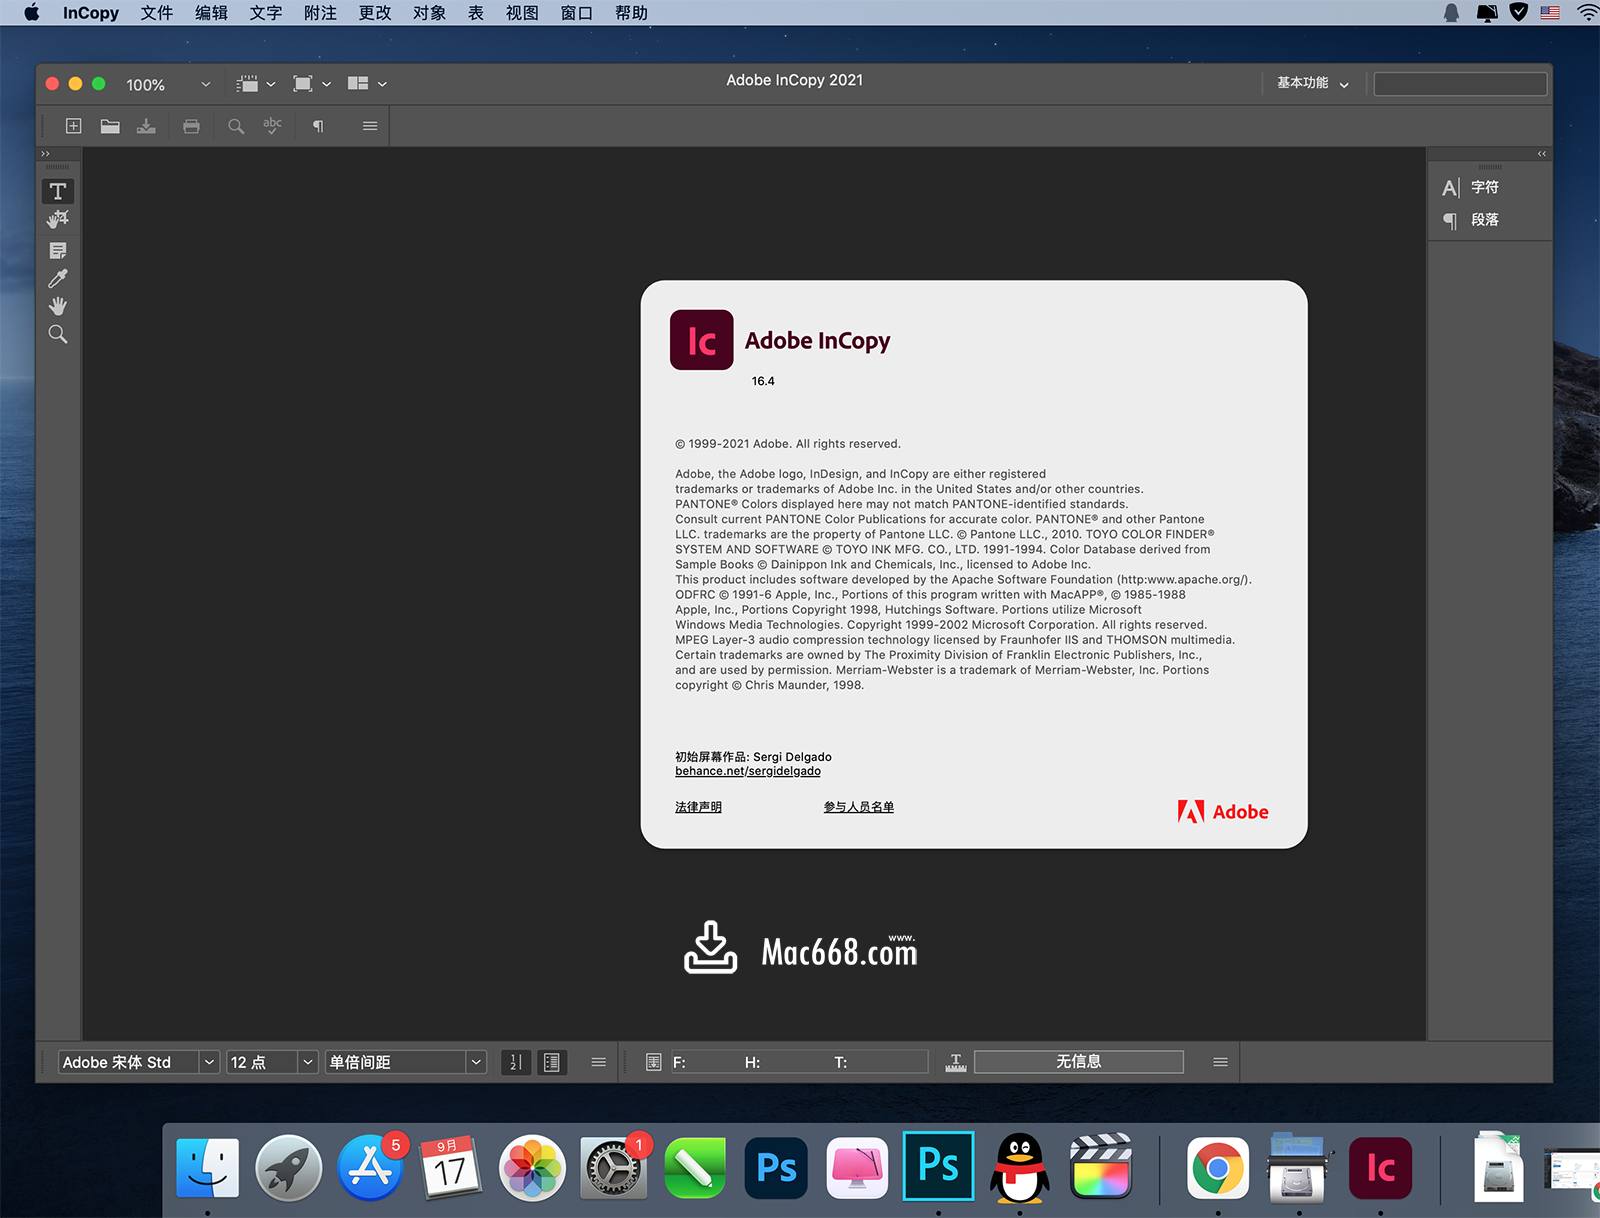 Adobe InCopy 2021 for Mac